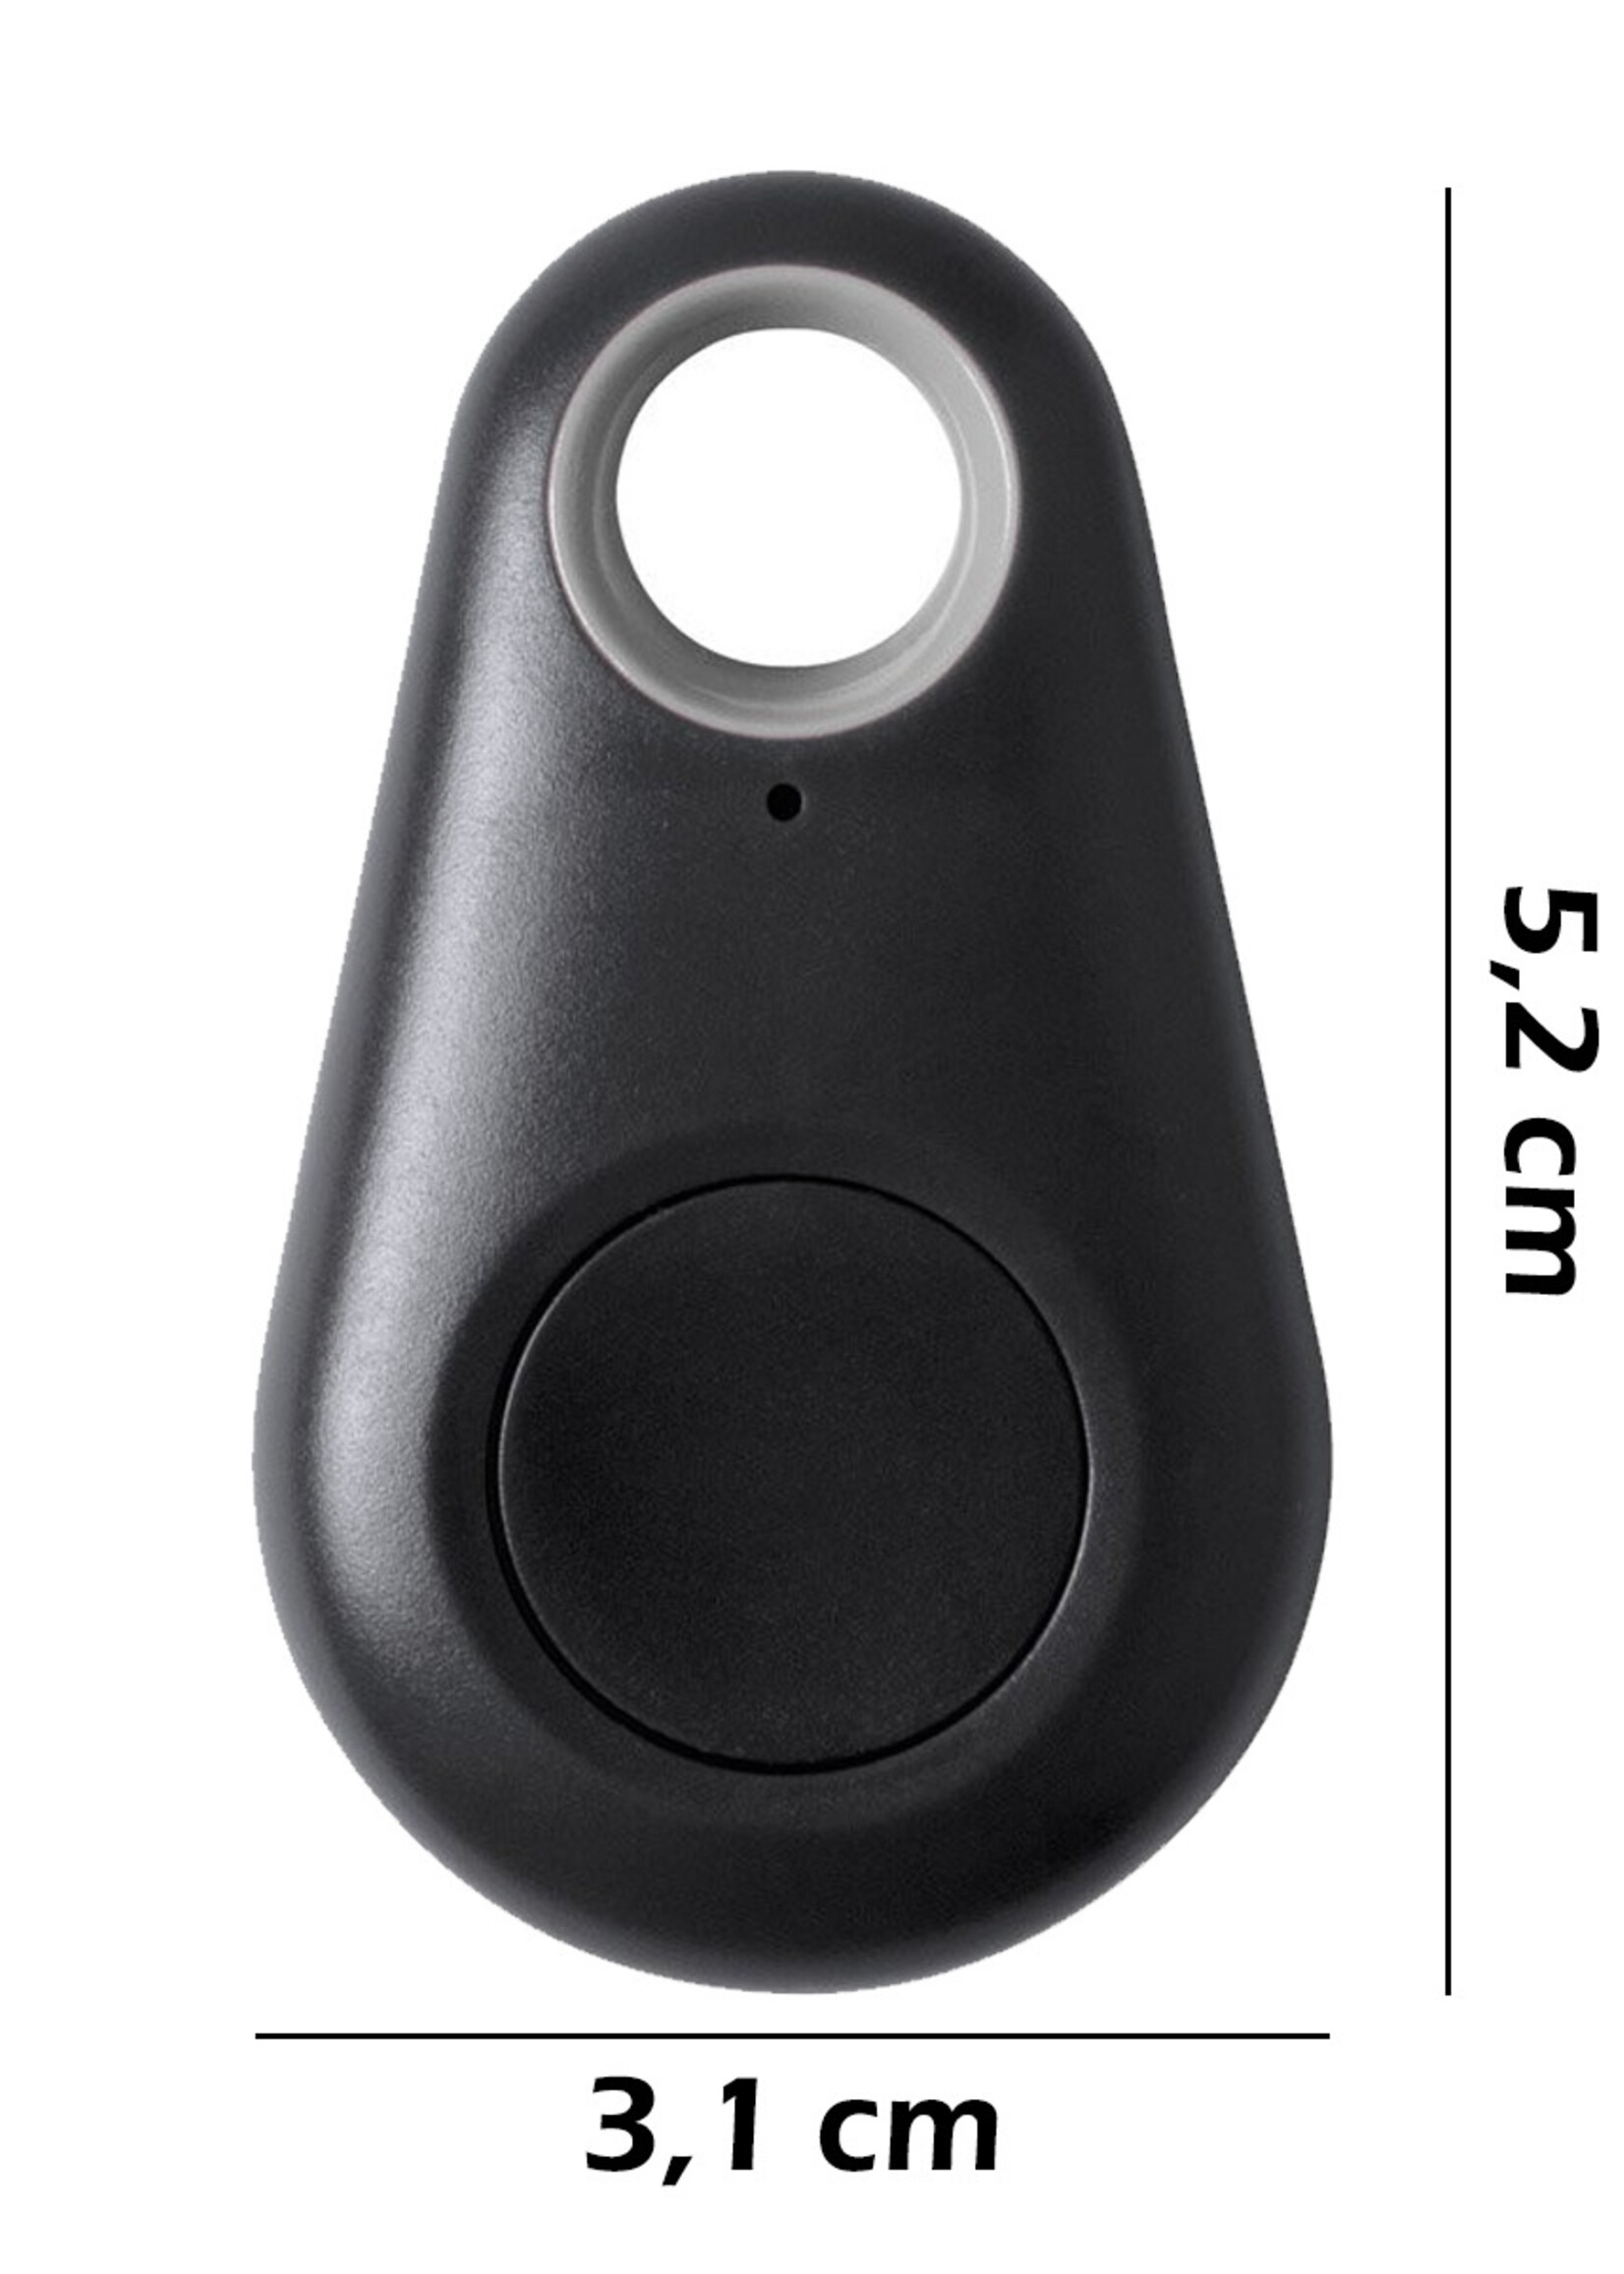 BTH Keyfinder Sleutelvinder Sleutelzoeker Sleutelhanger Keyfinder Bluetooth Sleutels Huisdier - Zwart